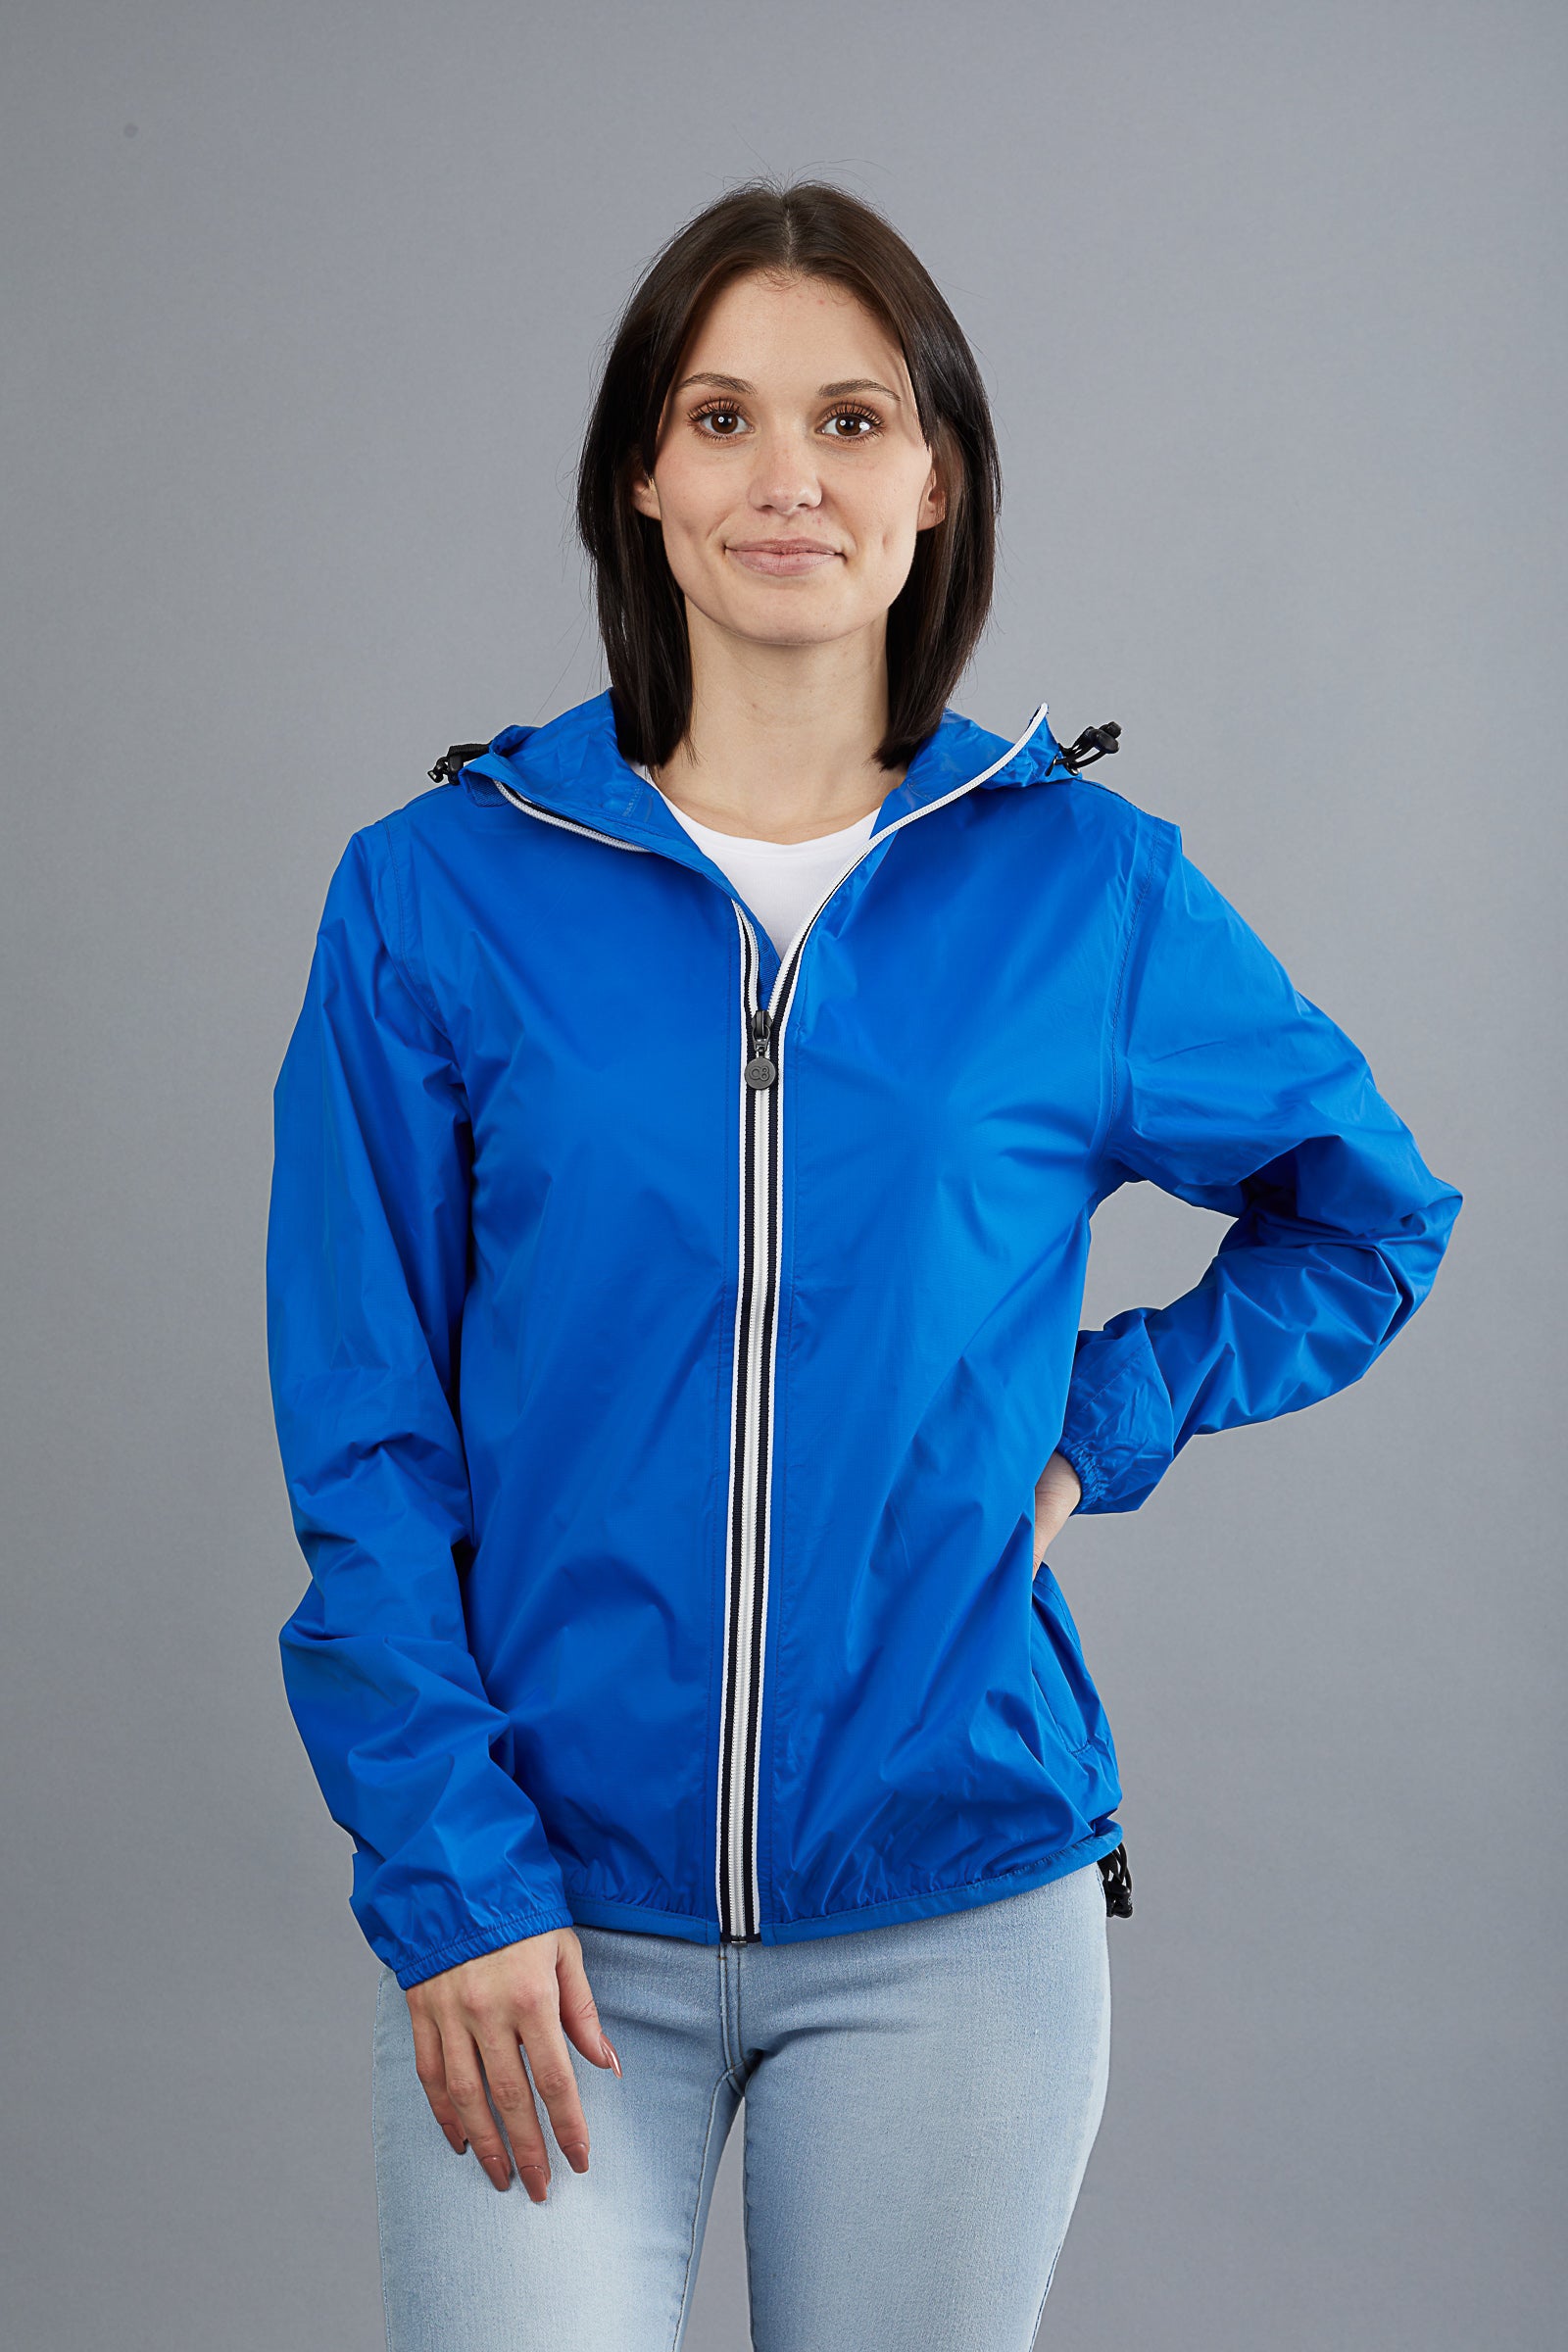 Royal blue full zip packable rain jacket and windbreaker - O8Lifestyle